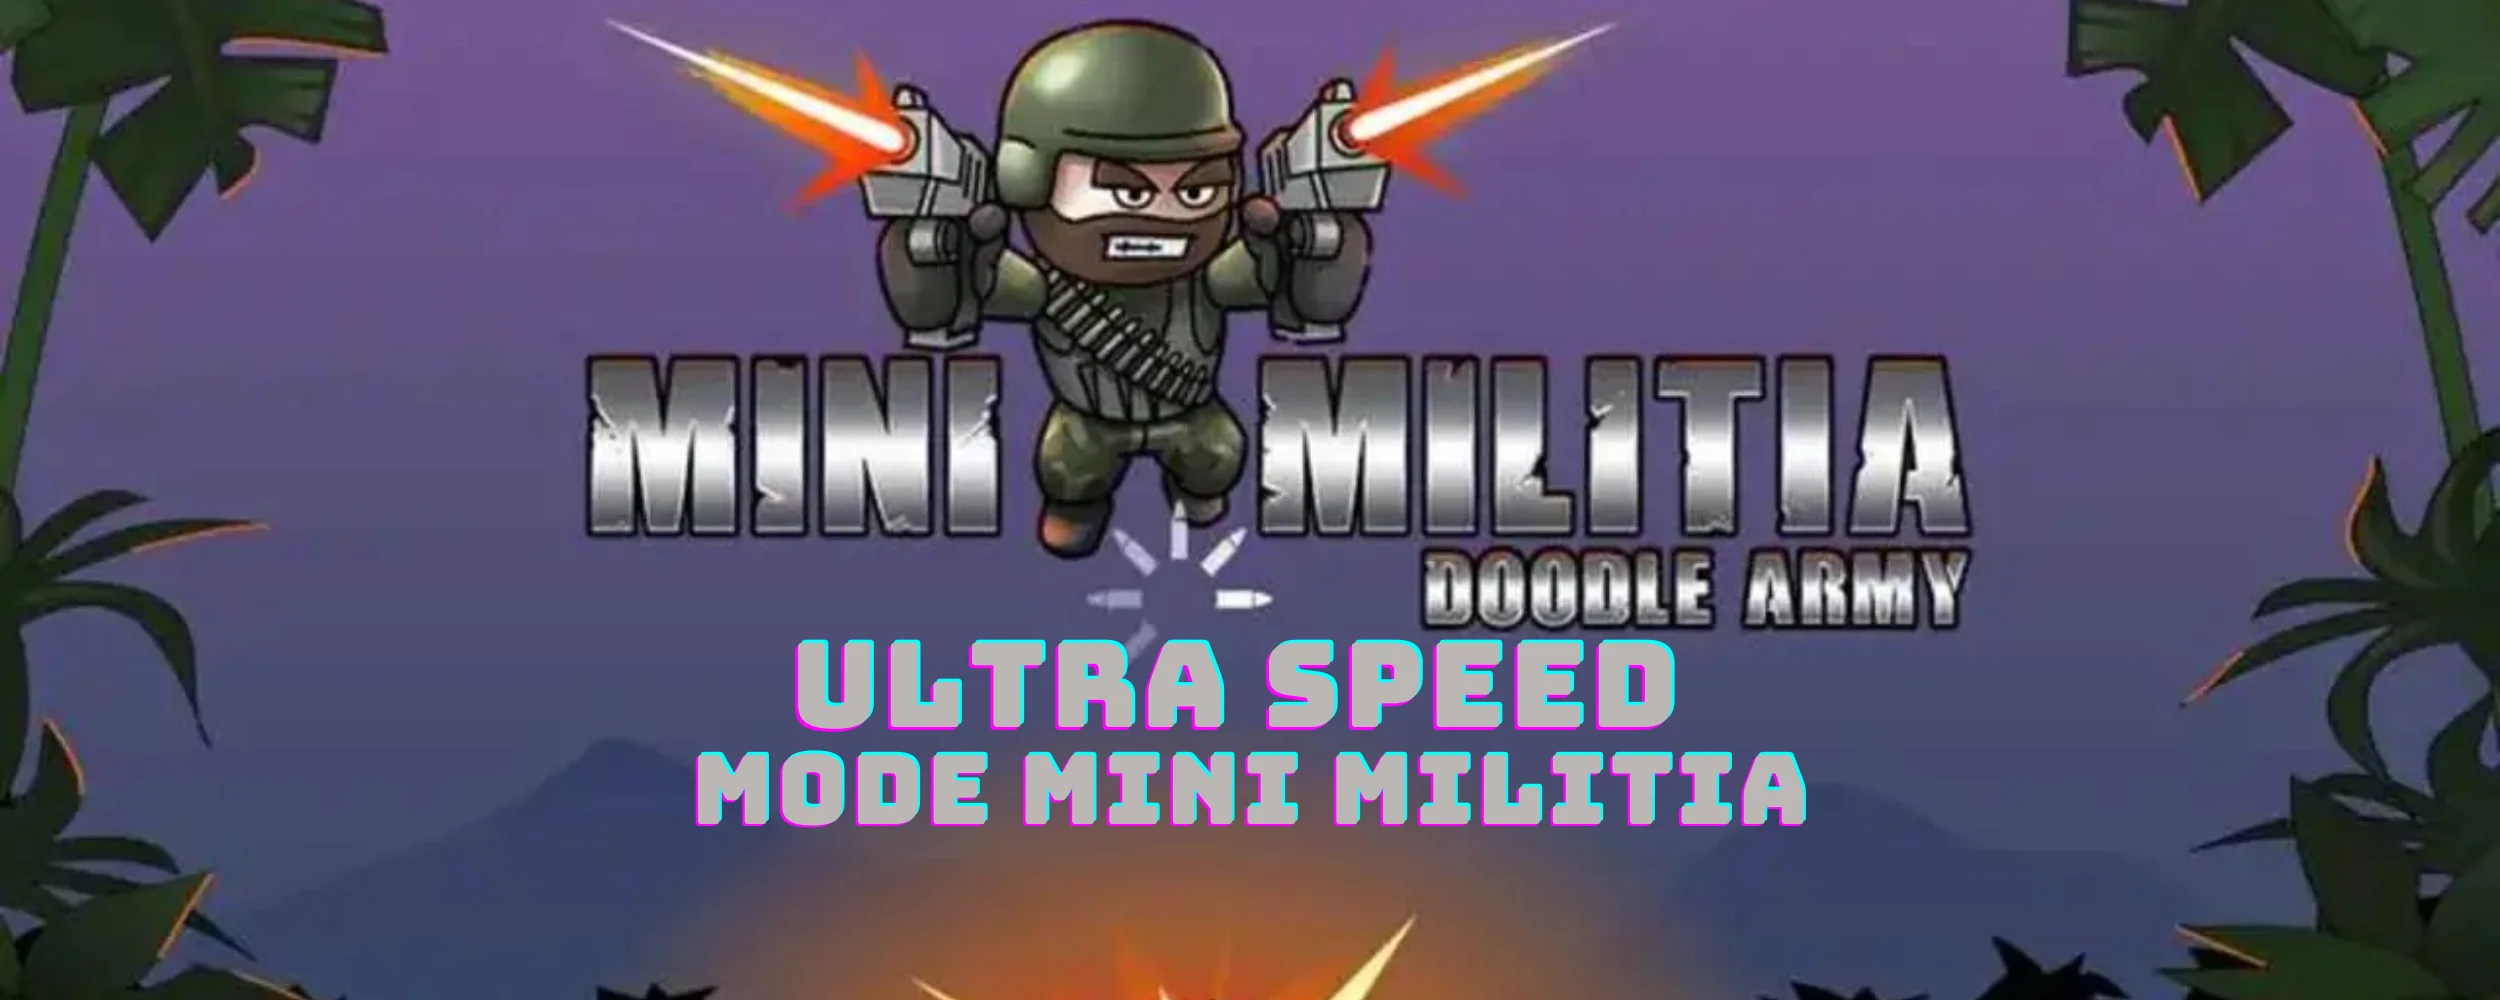 speed hack mod mini militia, speed increase mode speed ultra